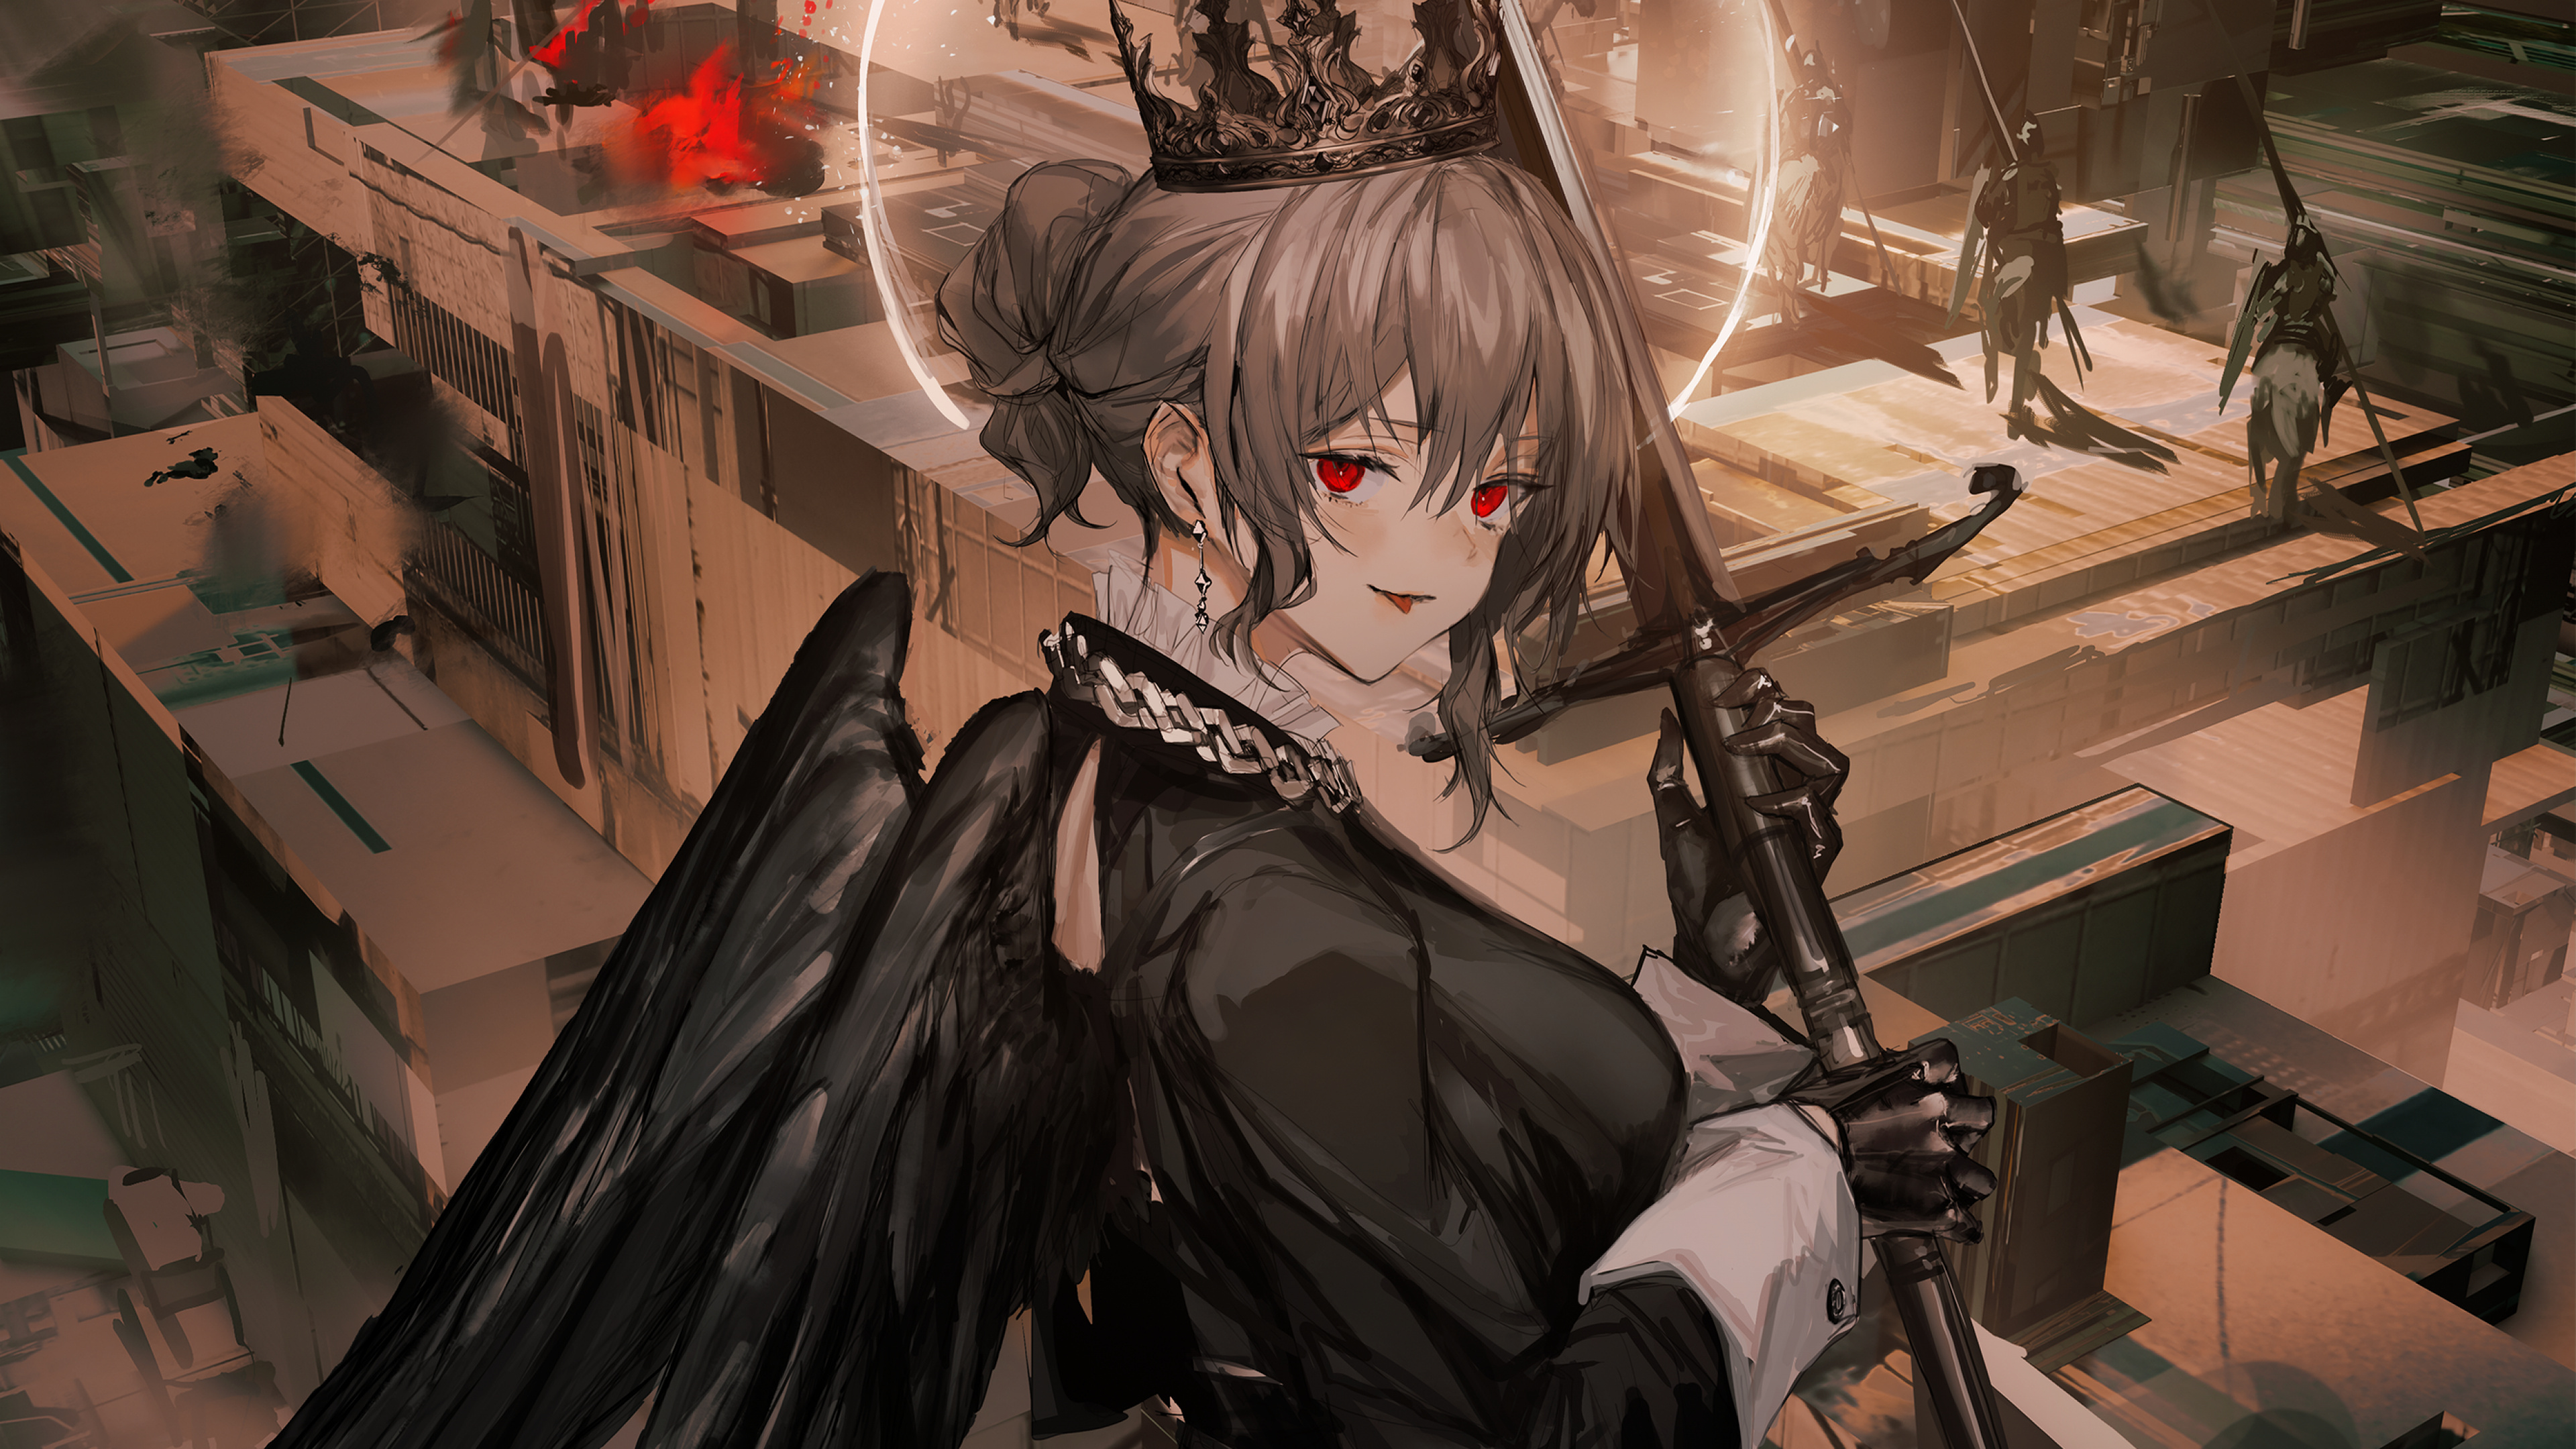 Gothic Anime: Fallen angel, Anime girl, Red eyes, Dark evil smiling, Black wings, Death riders. 3840x2160 4K Wallpaper.